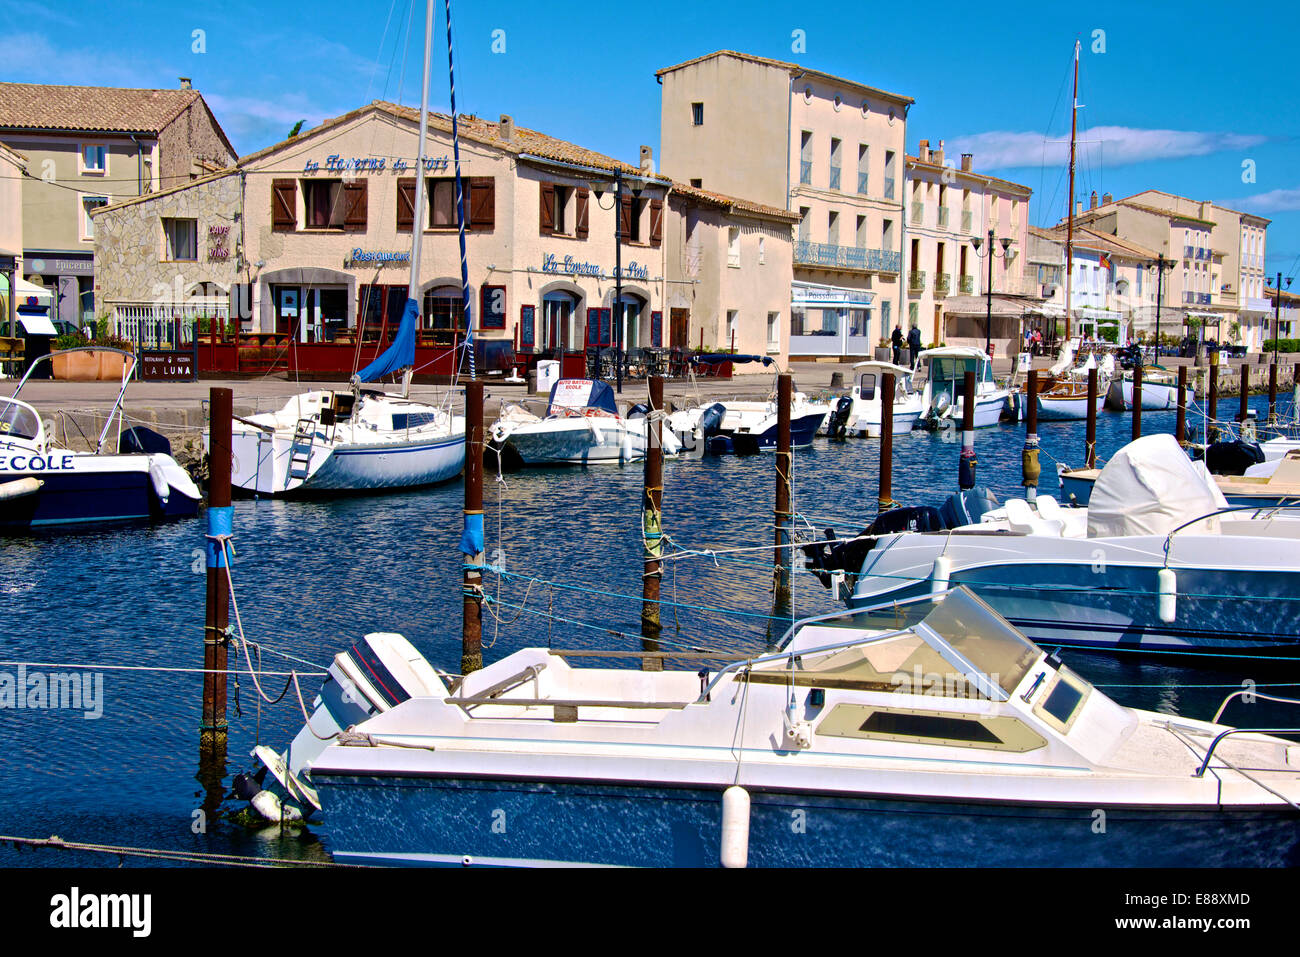 Tourist boats in marina in Marseillan harbor, Herault, Languedoc-Roussillon region, France, Europe Stock Photo